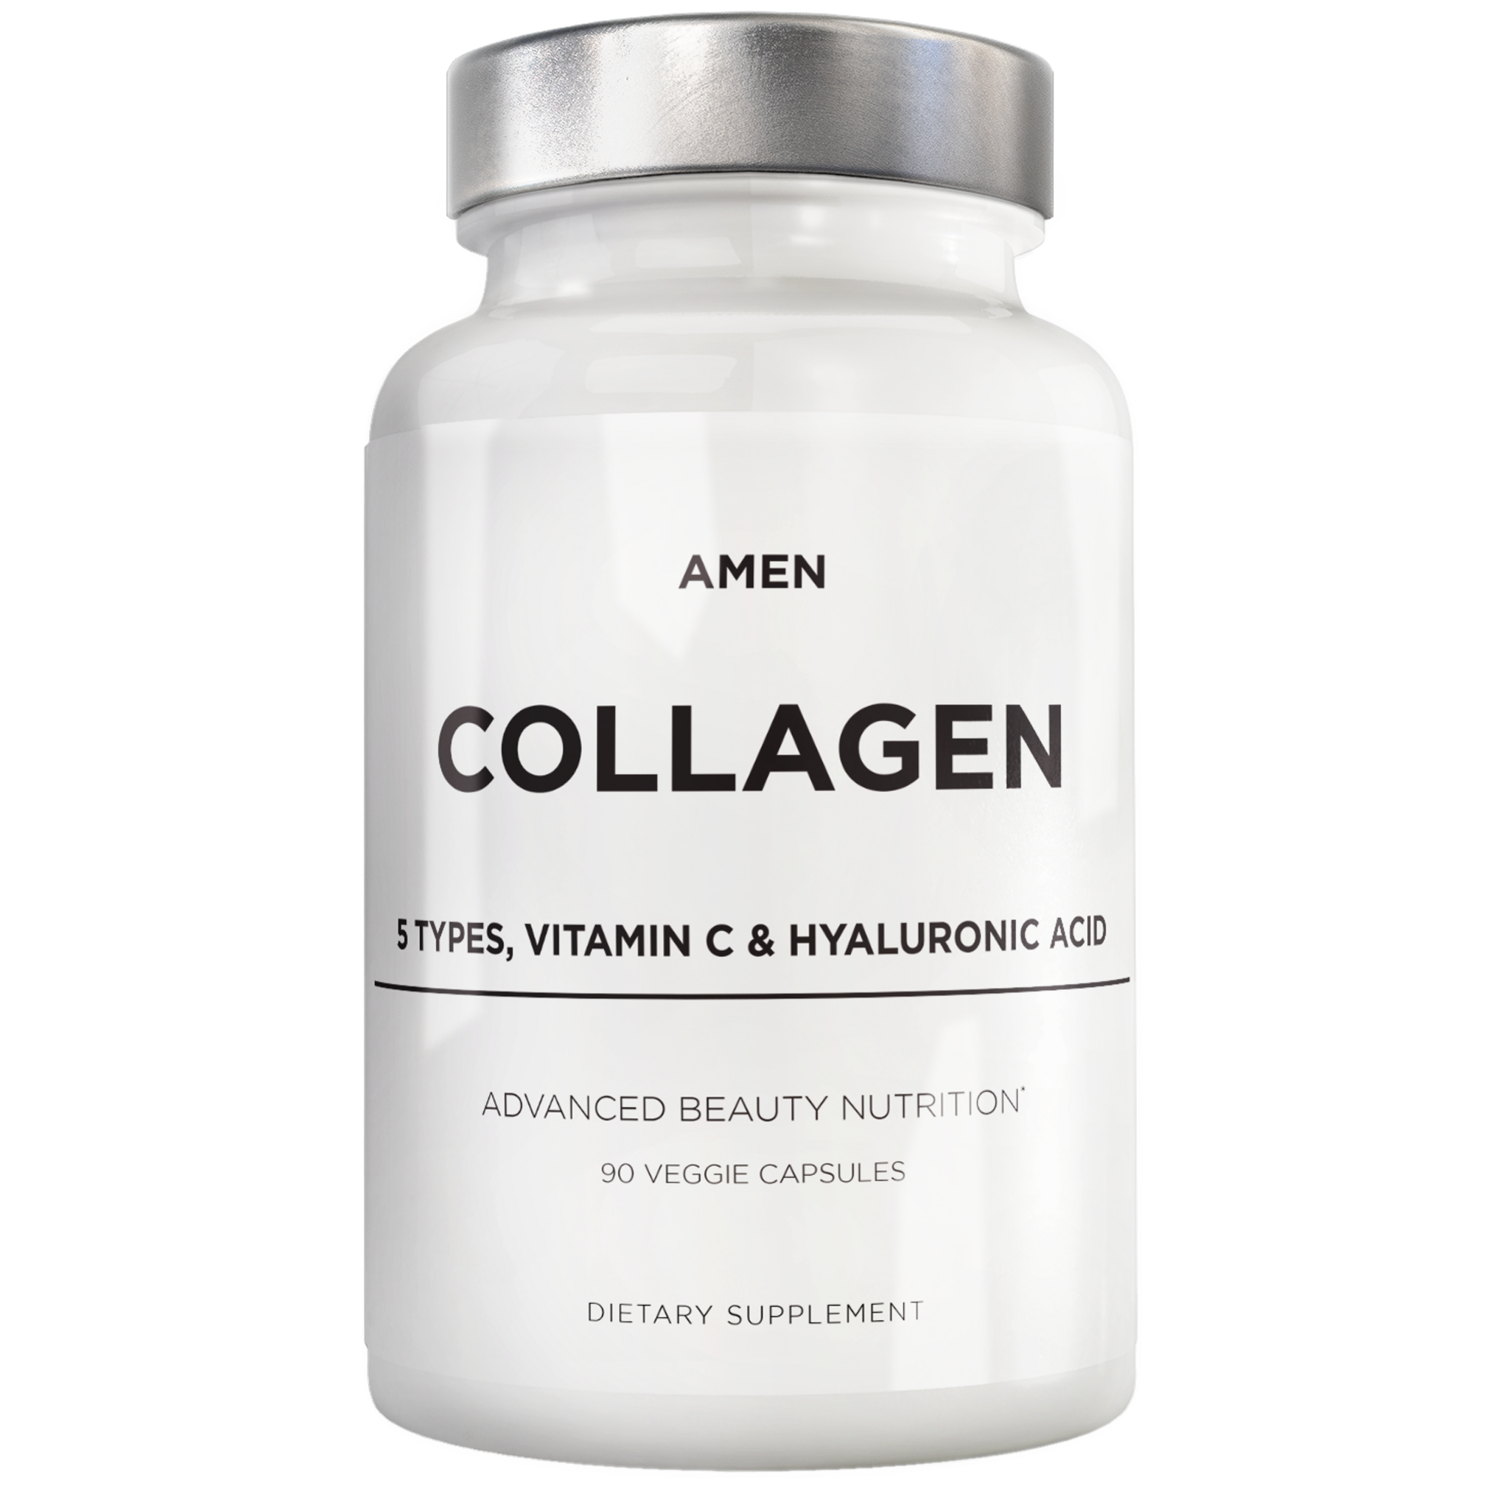 Collagen 5 types 90 vegcaps Amen